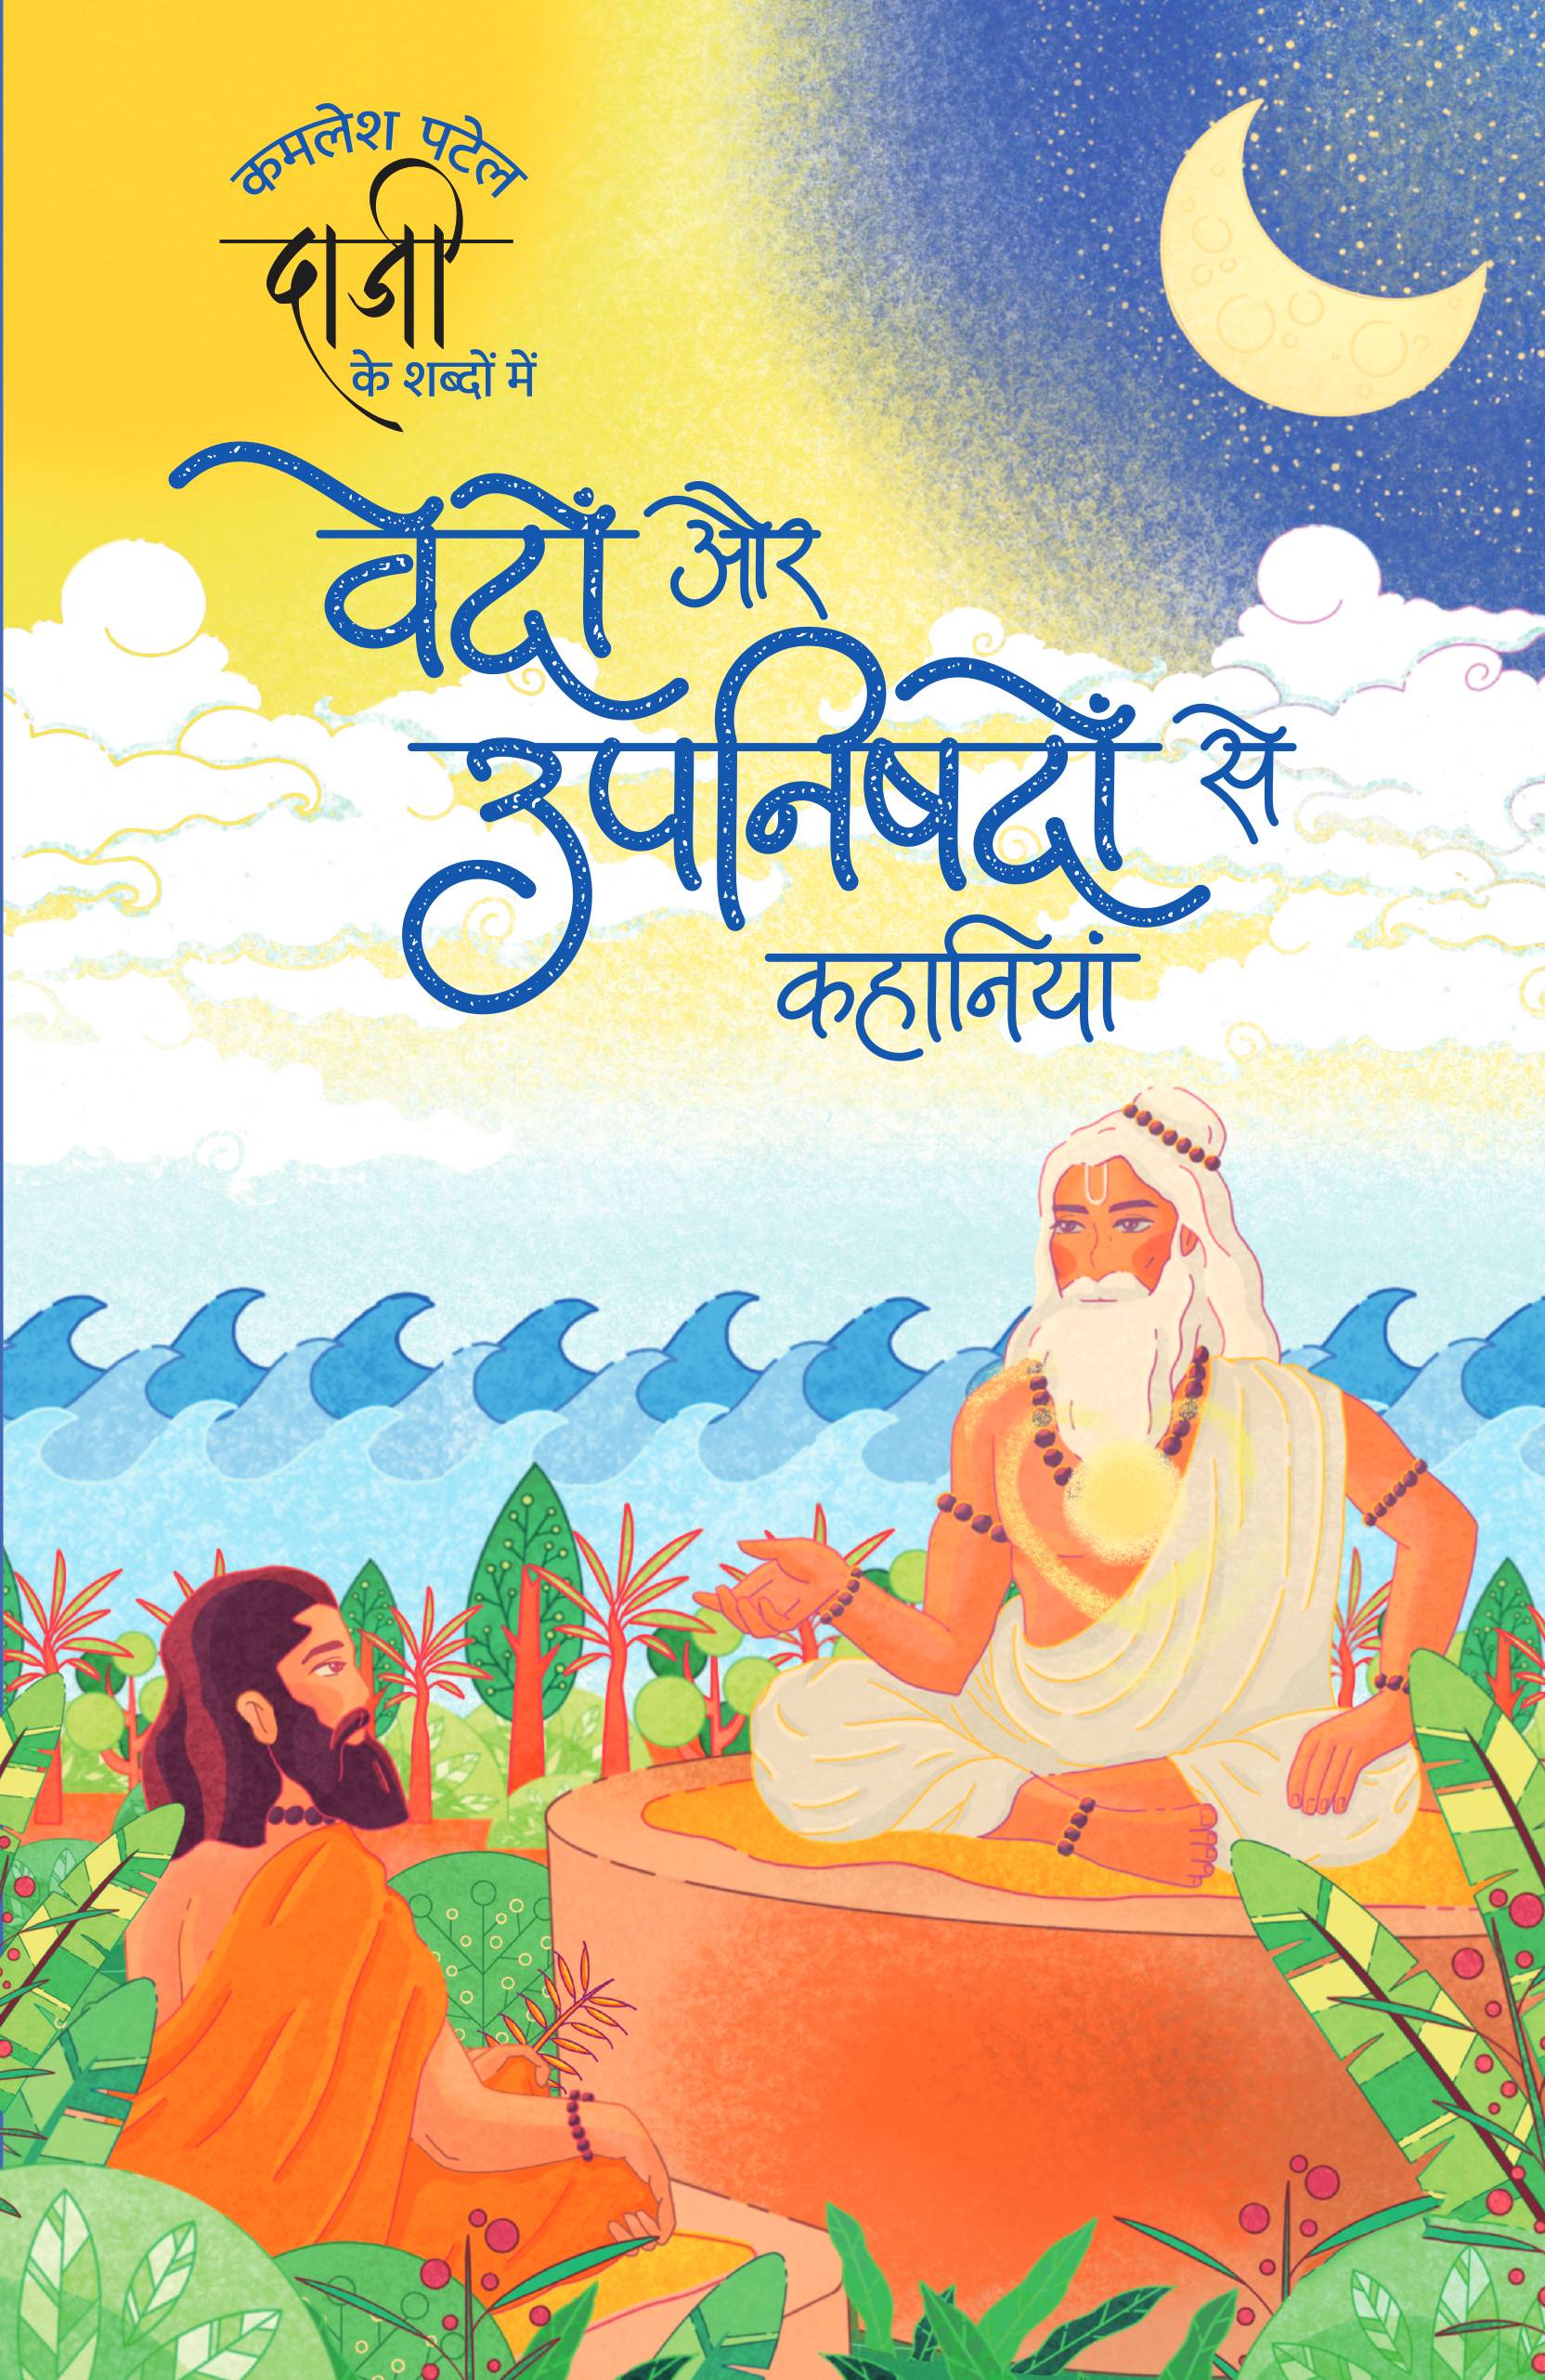 Tales from the Vedas and Upanishads - Digital Book (Hindi) - hfnl!fe